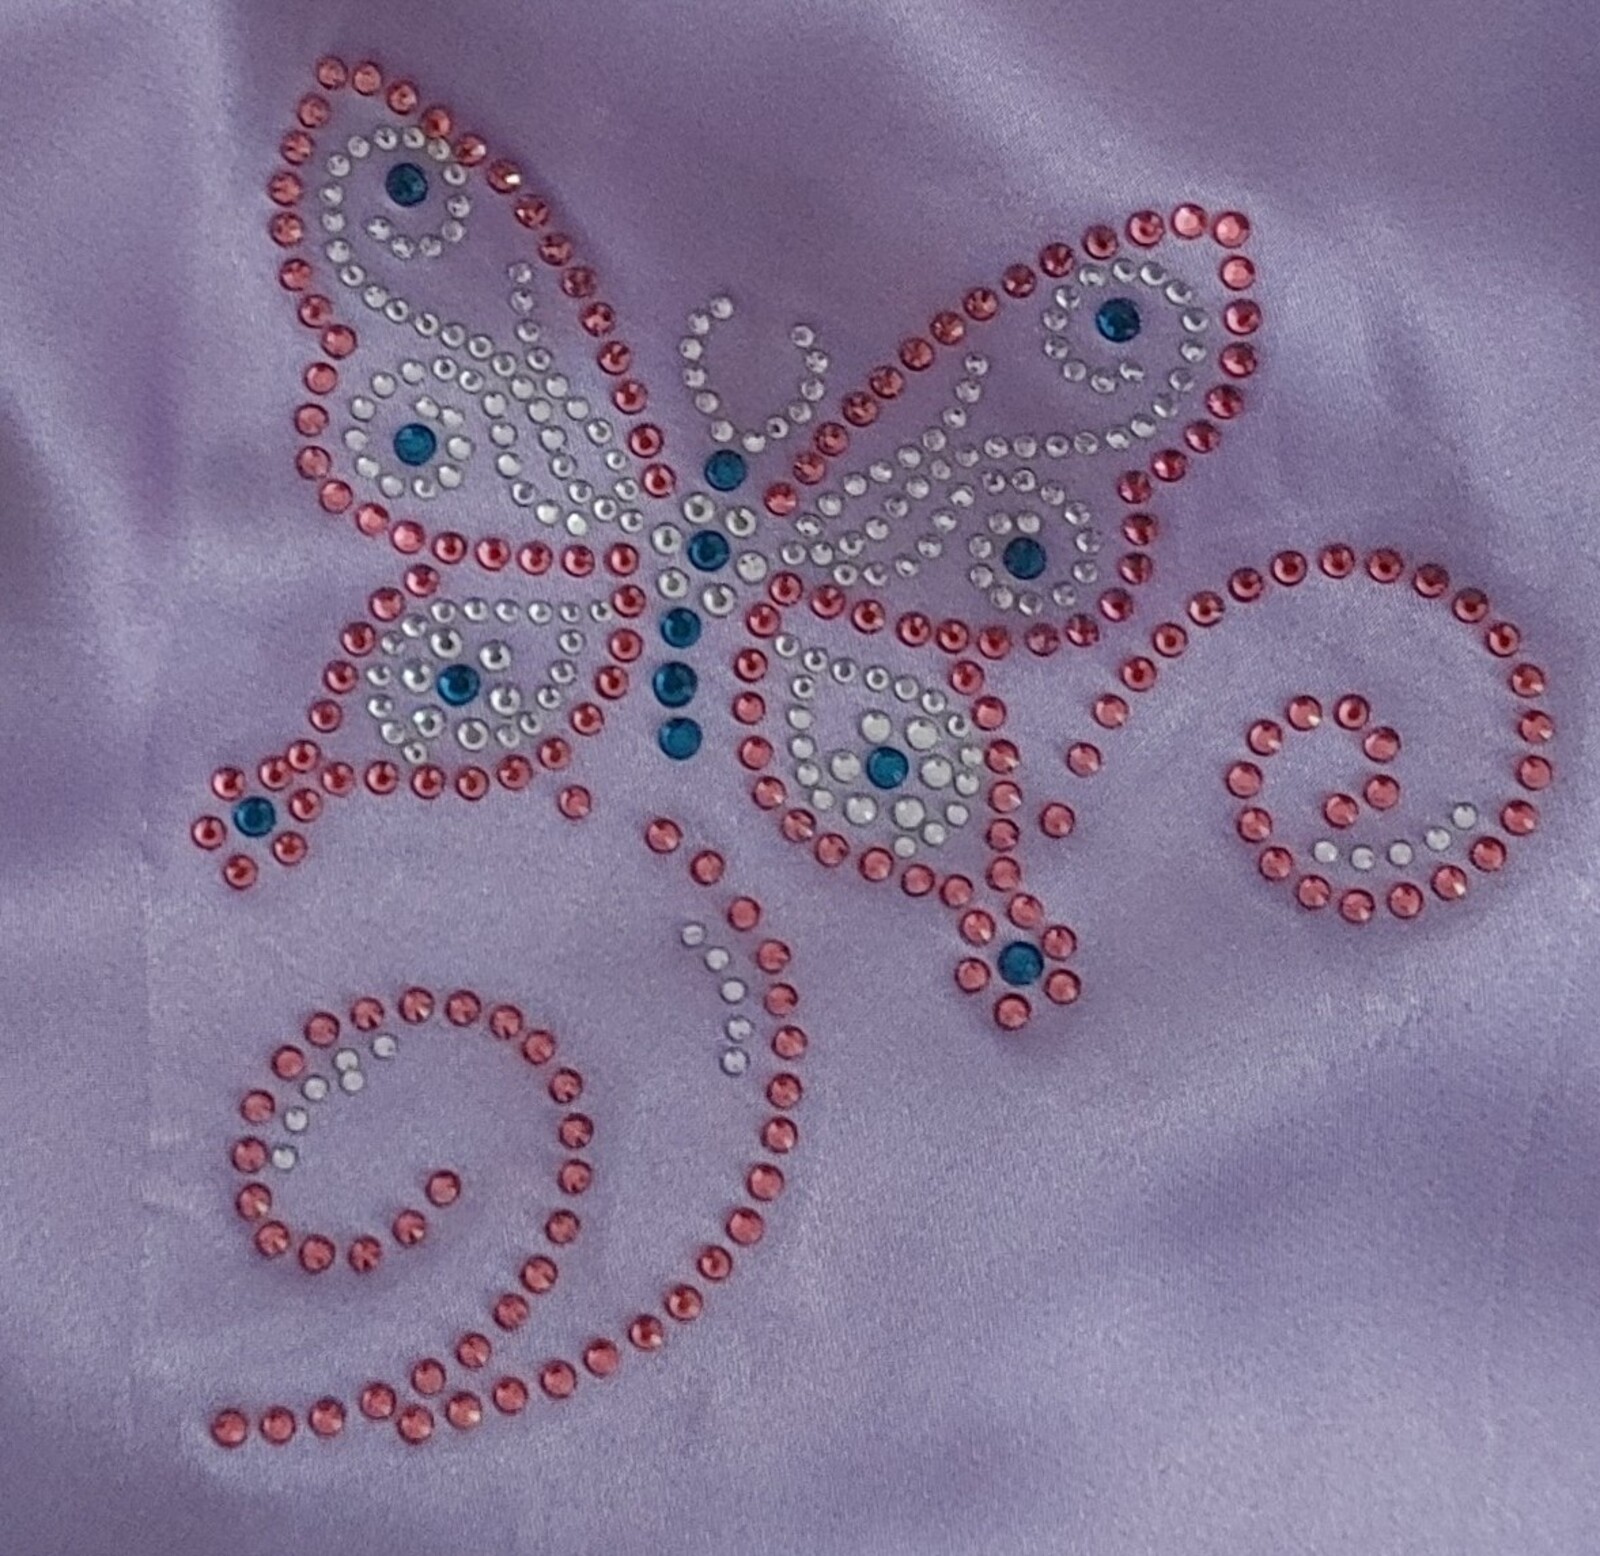 Diamante Shower Cap - Lilac Butterfly